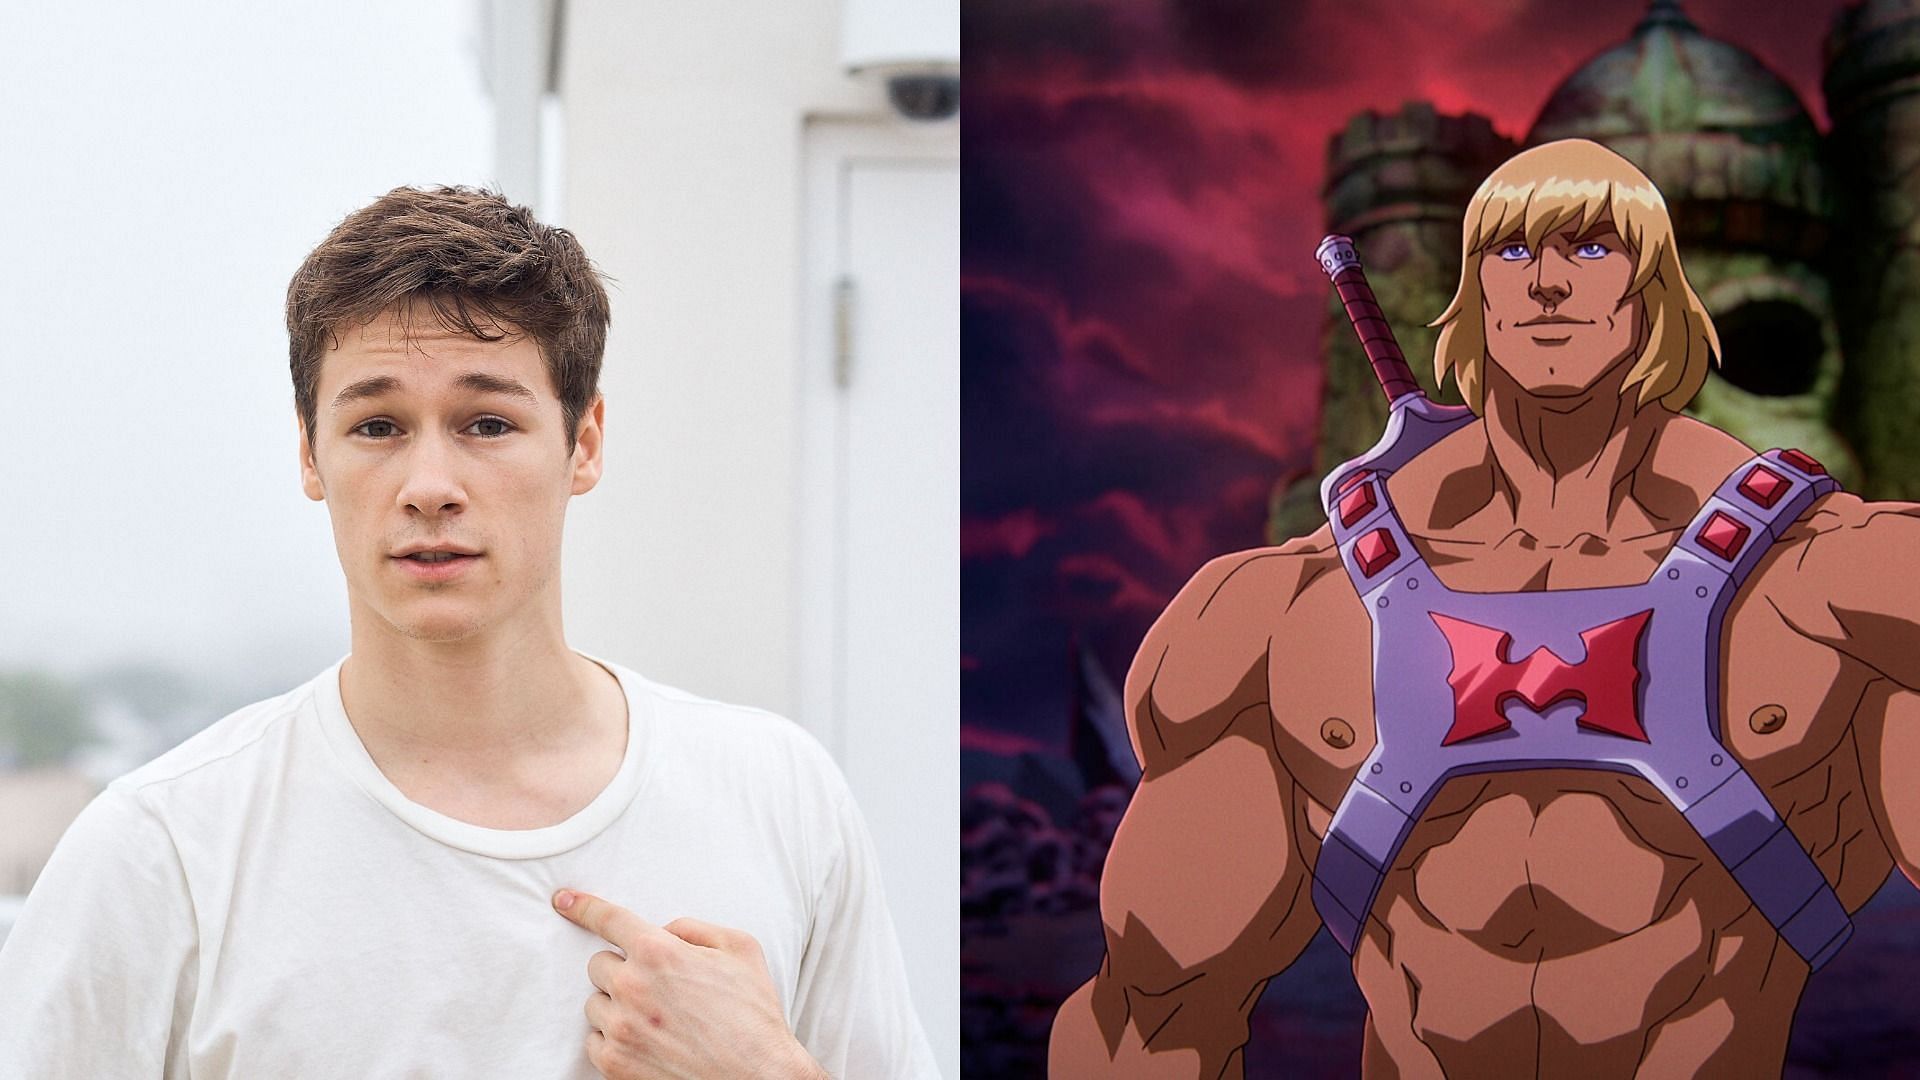 Kyle Allen will play He-man in an upcoming film (Images via Sportskeeda)